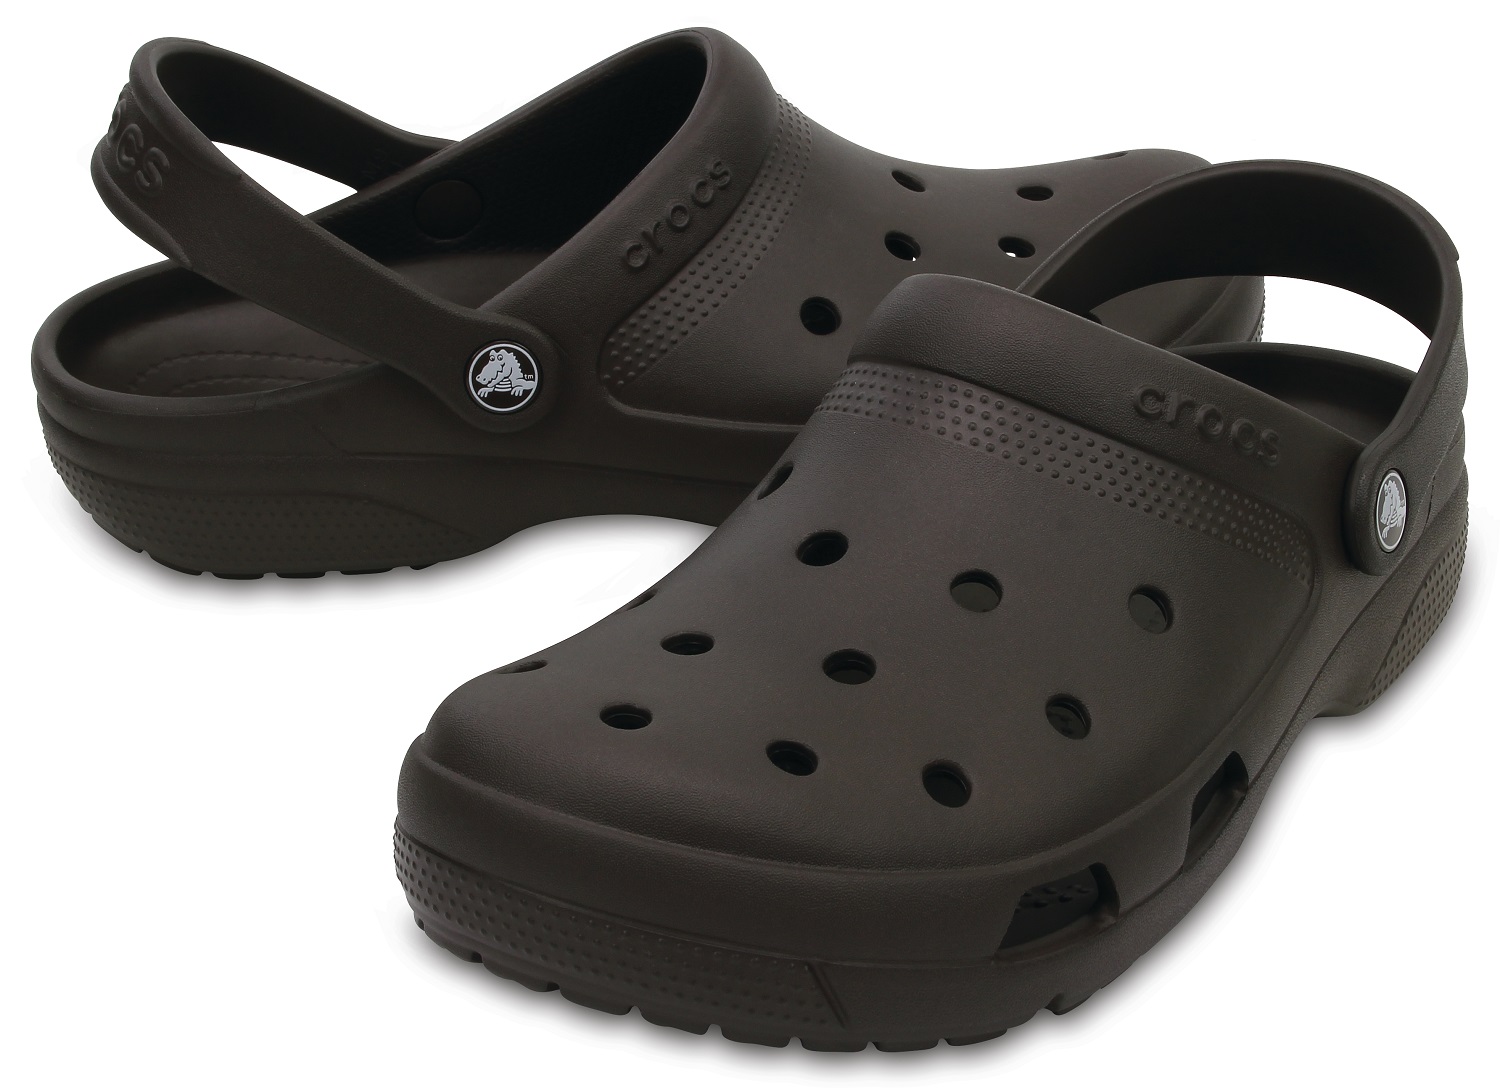 Buy Crocs Men Brown Clog Online @ ₹1995 from ShopClues